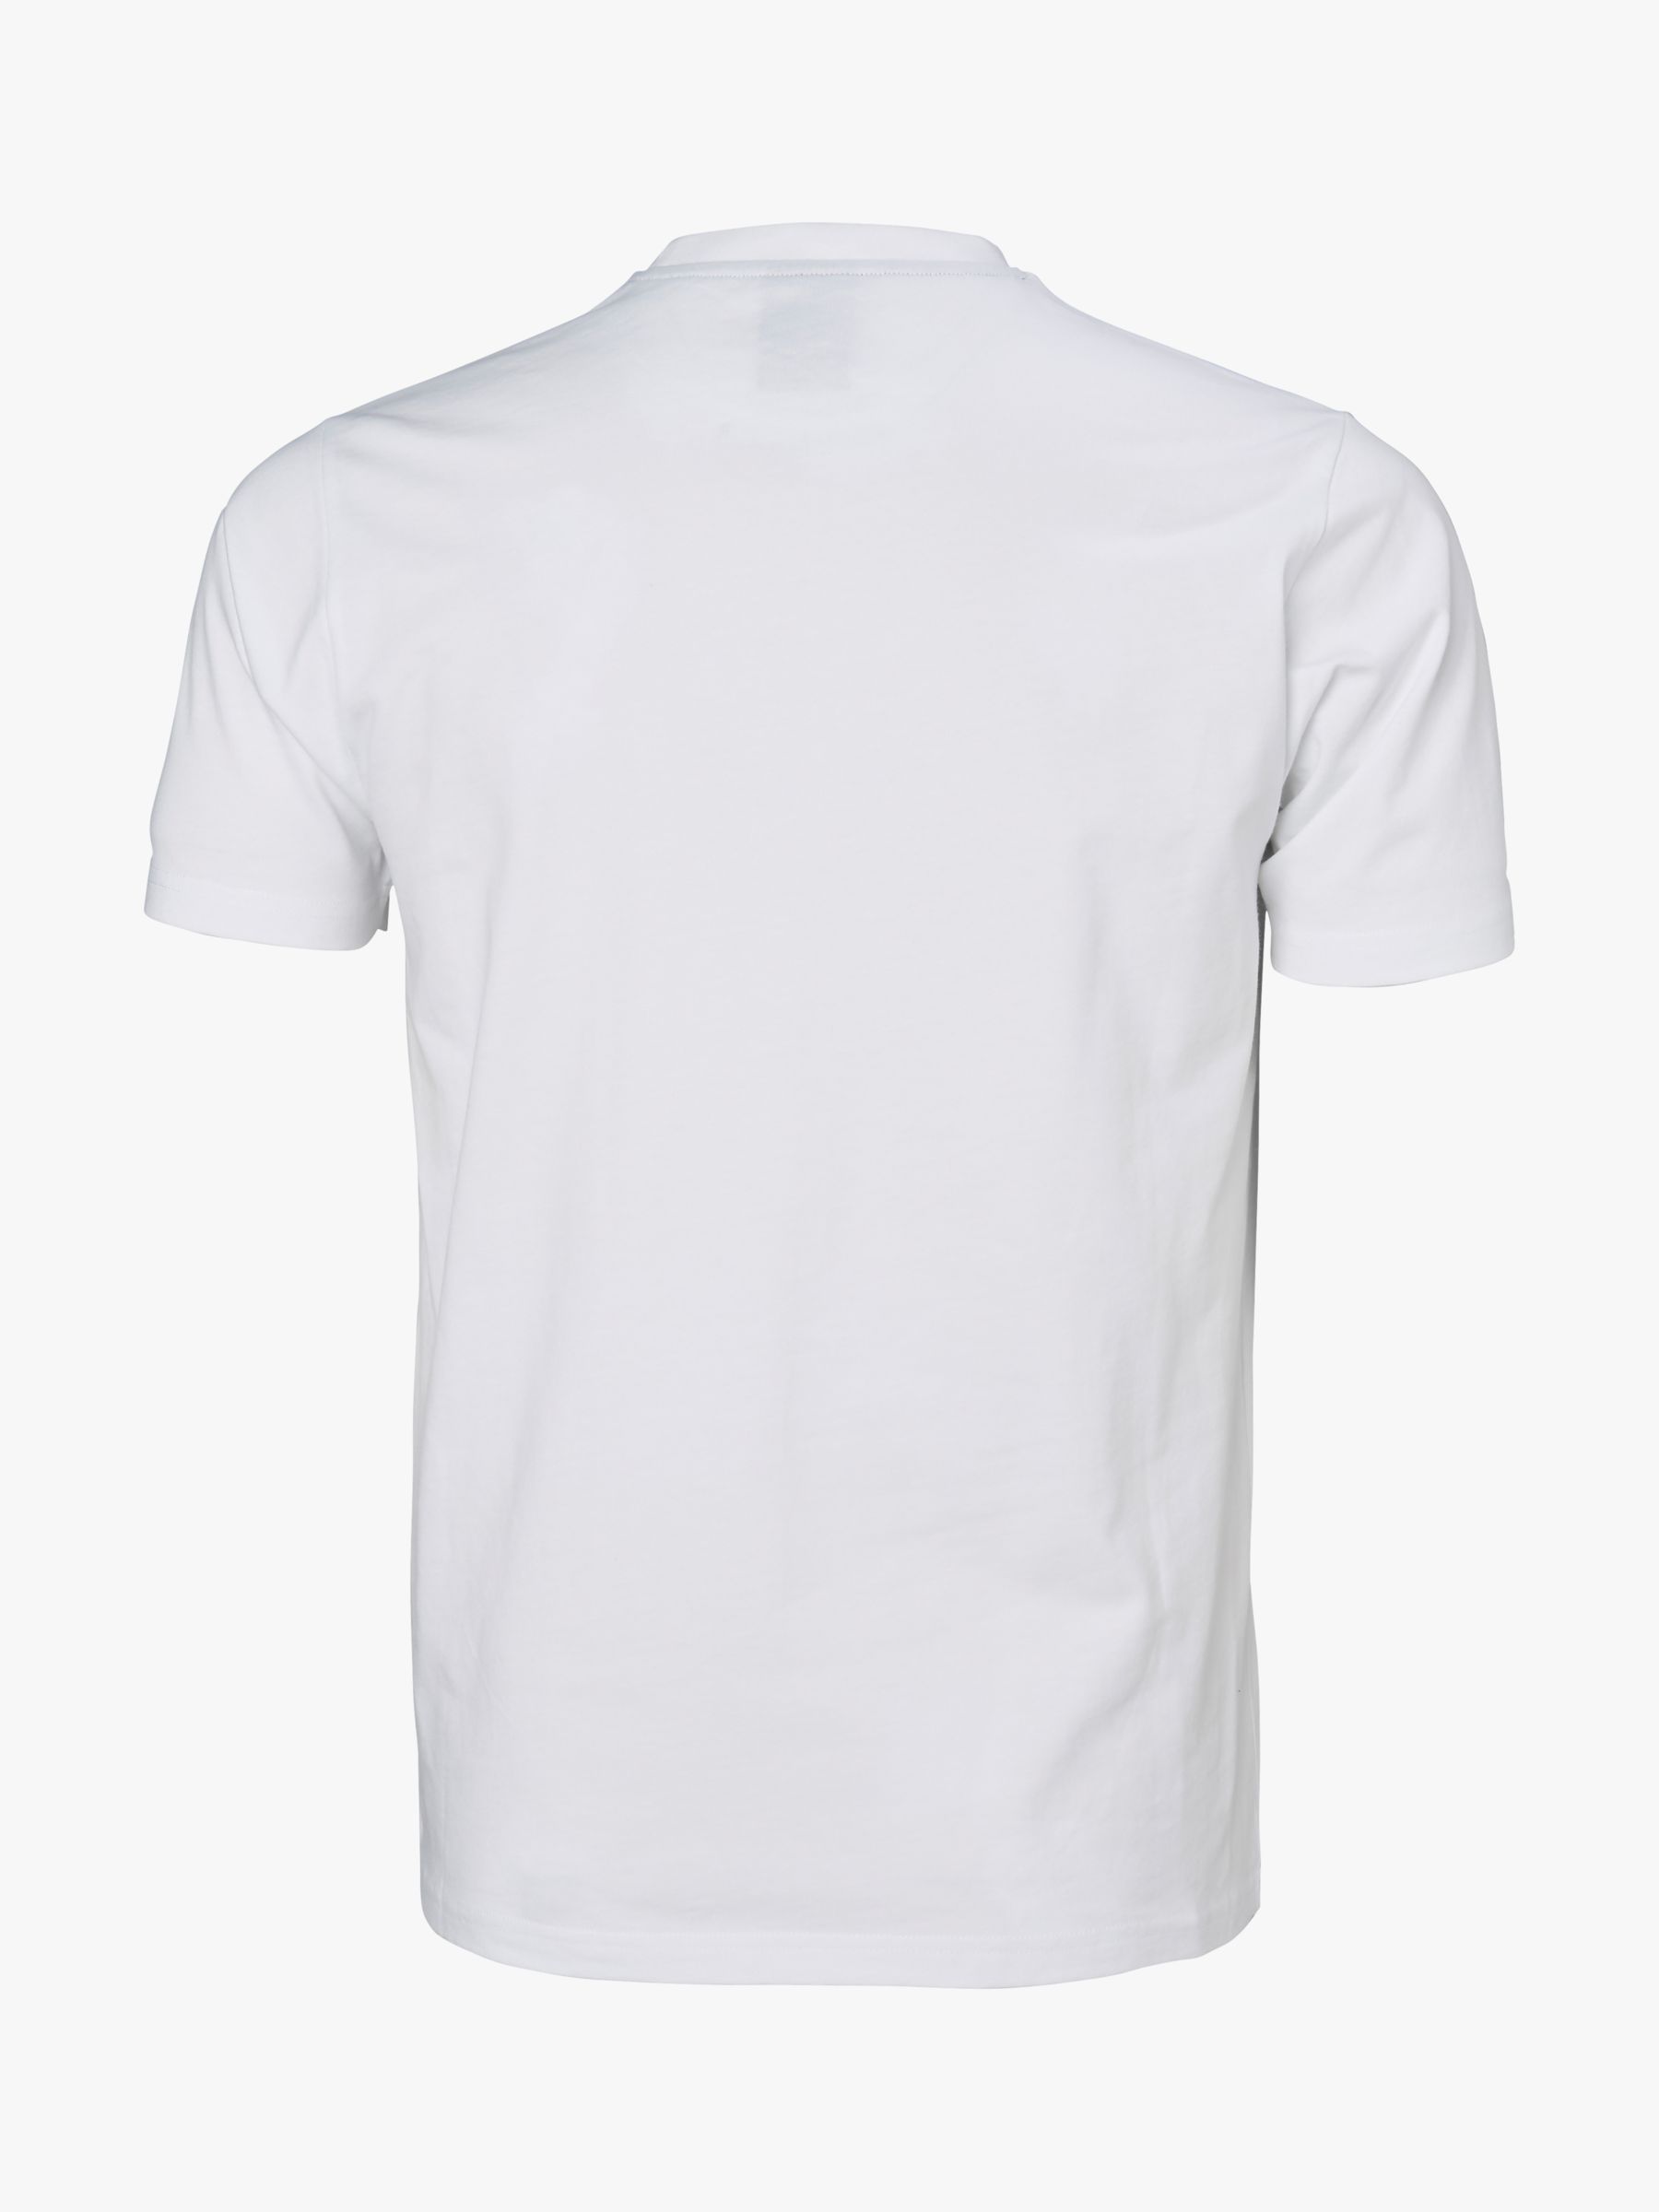 Helly Hansen Logo T-Shirt, White, S